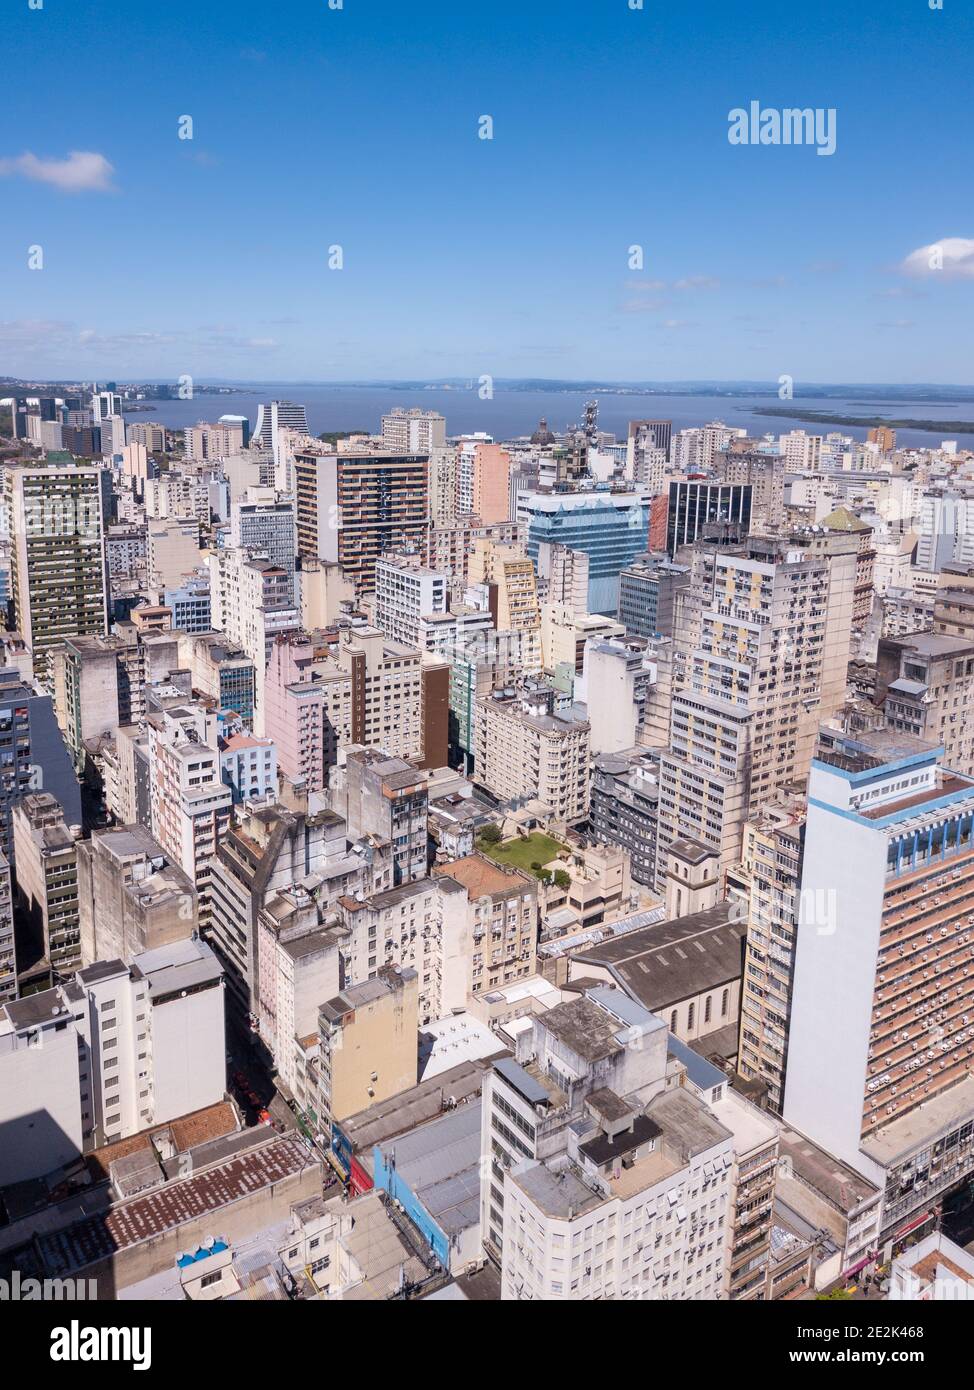 Drone aerial view of buildings skyline of Porto Alegre city, Rio Grande do Sul state, Brazil. Beautiful sunny summer day with blue sky. Urban concept. Stock Photo